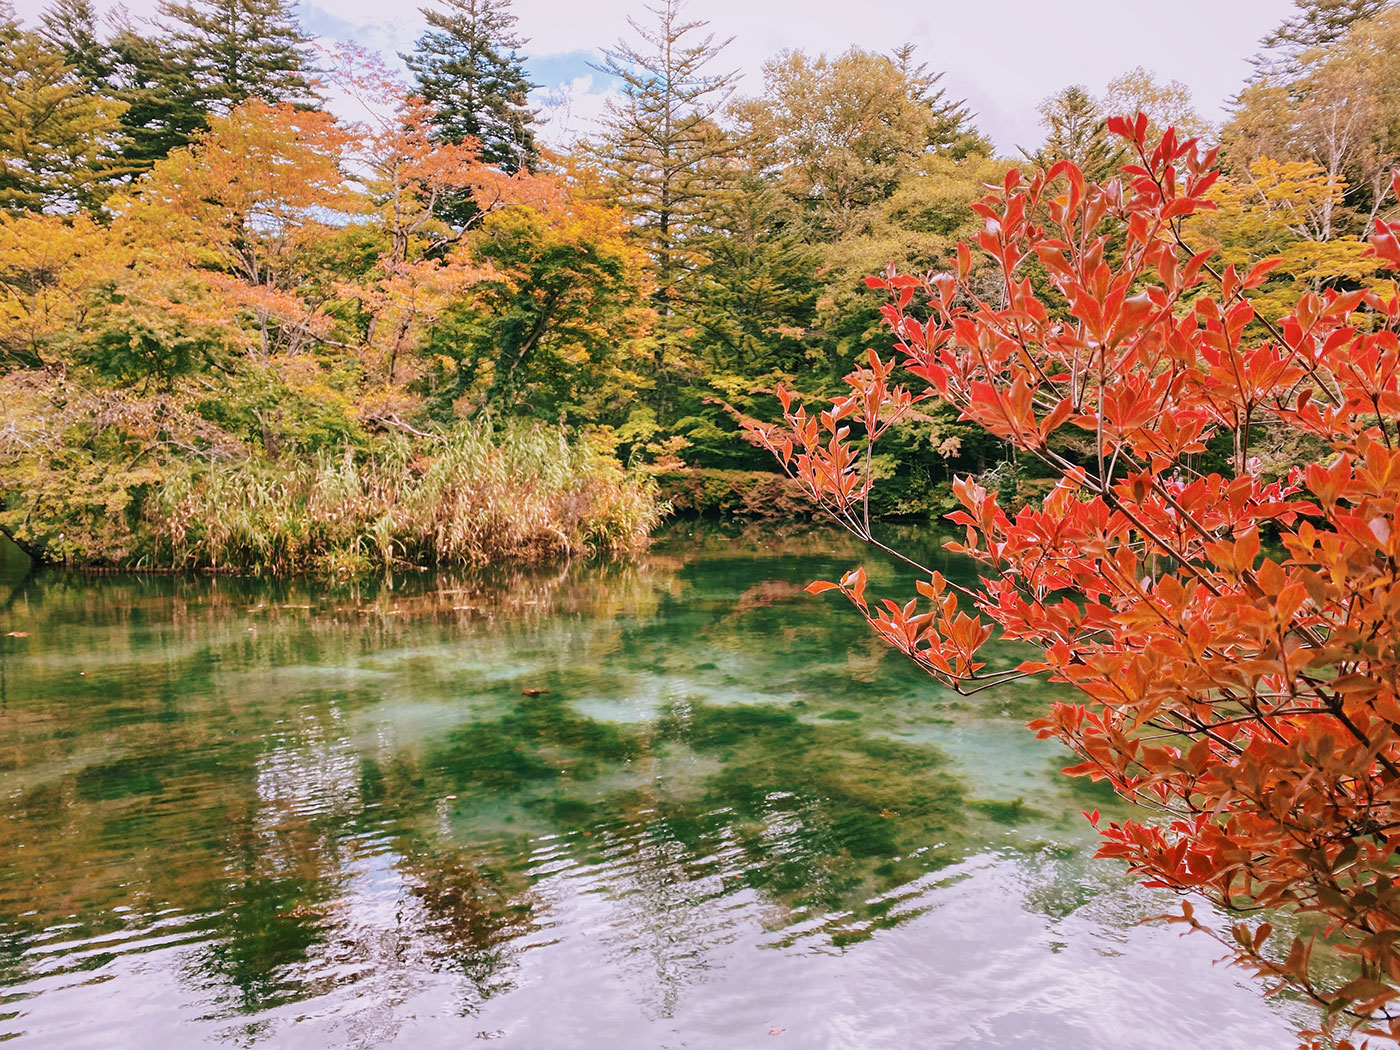 Kumabo Pond in Karuizawa